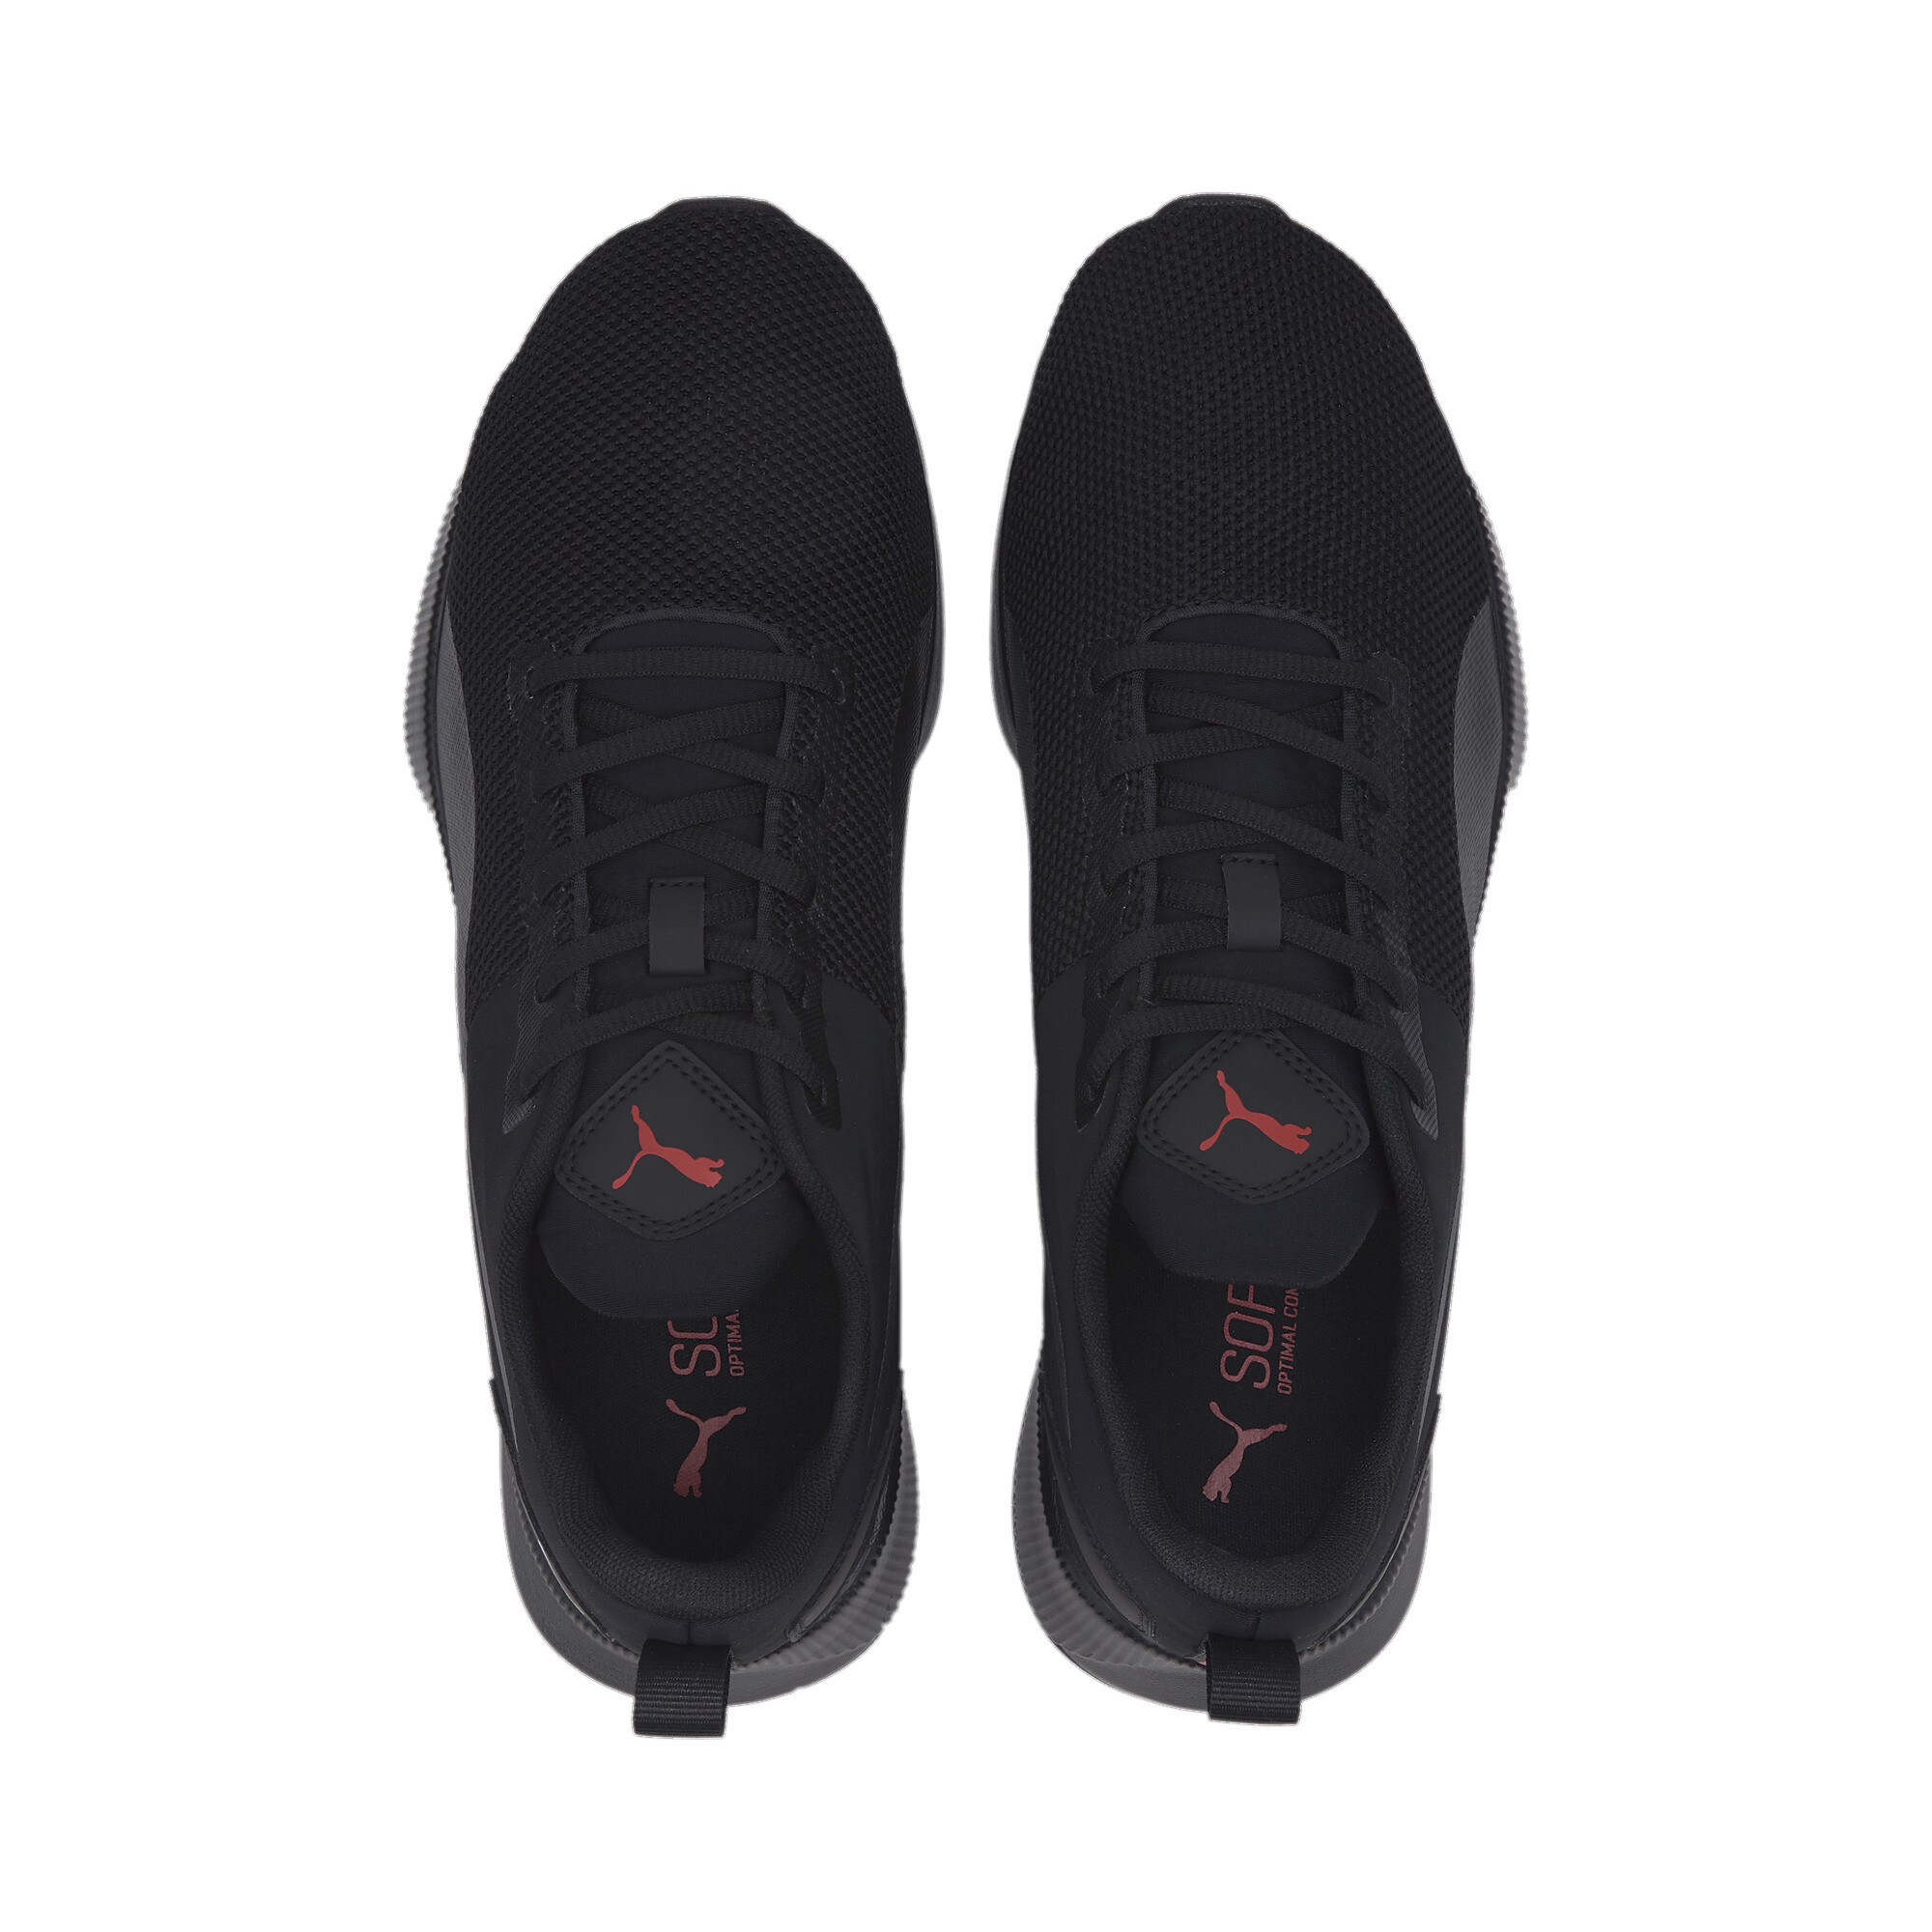 Men's PUMA Flyer Running Shoes In Black, Size EU 39